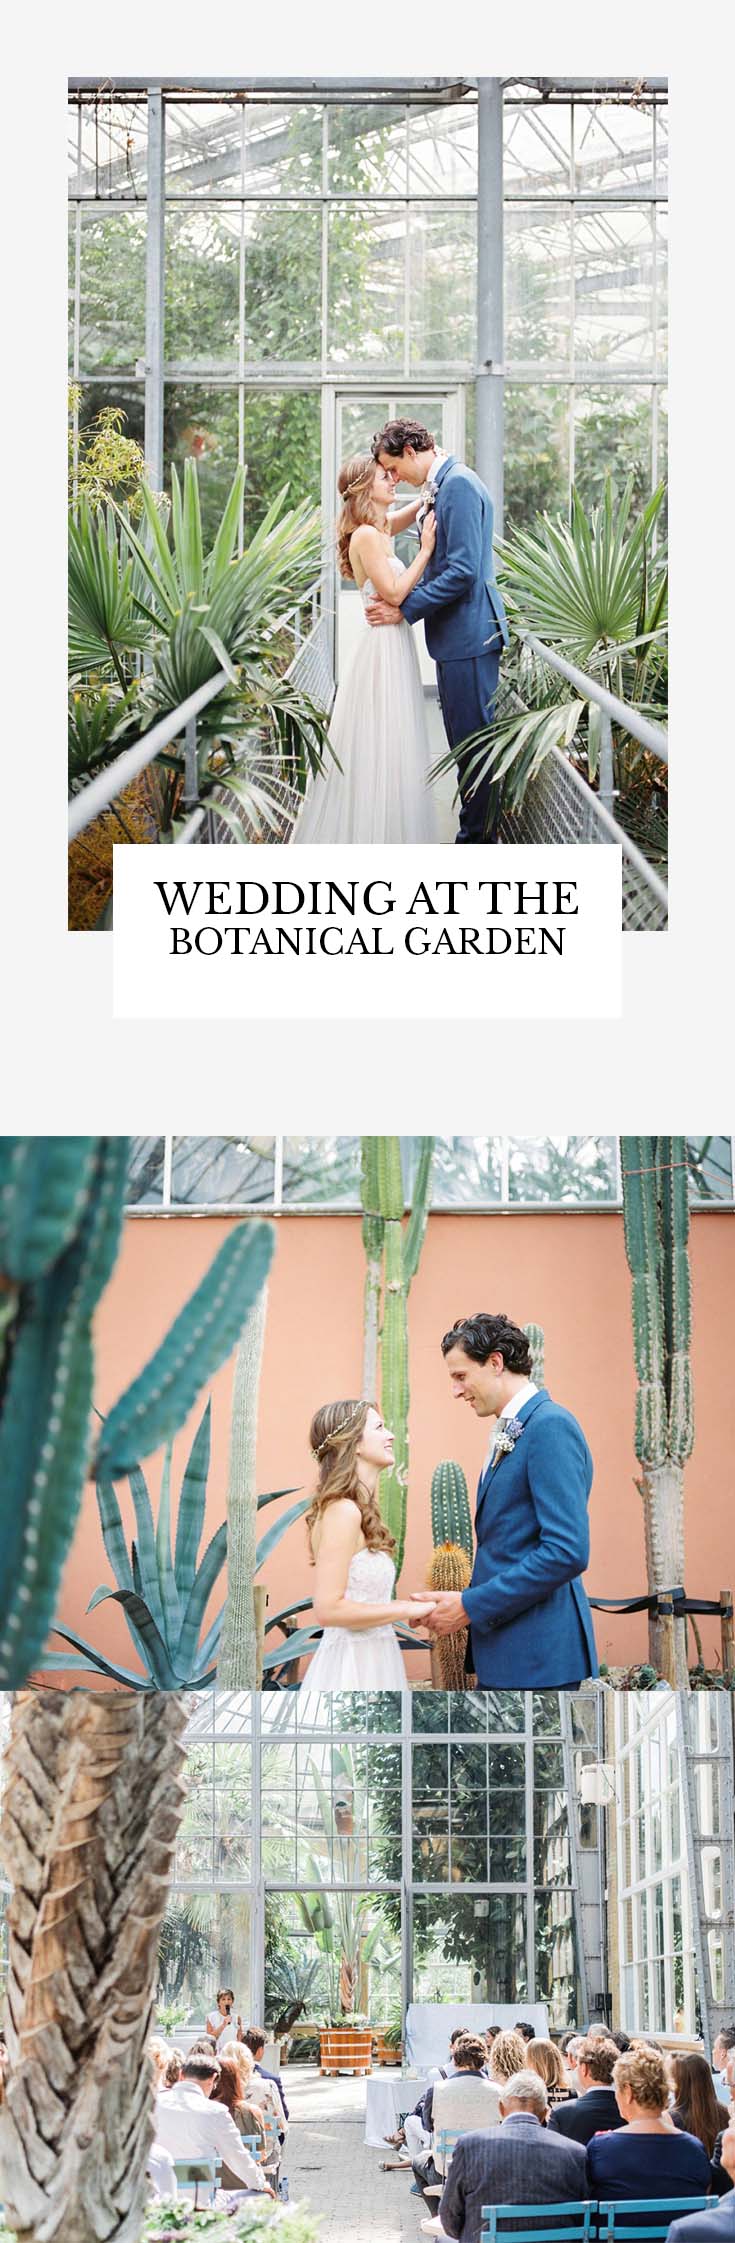 Wedding at the botanical garden